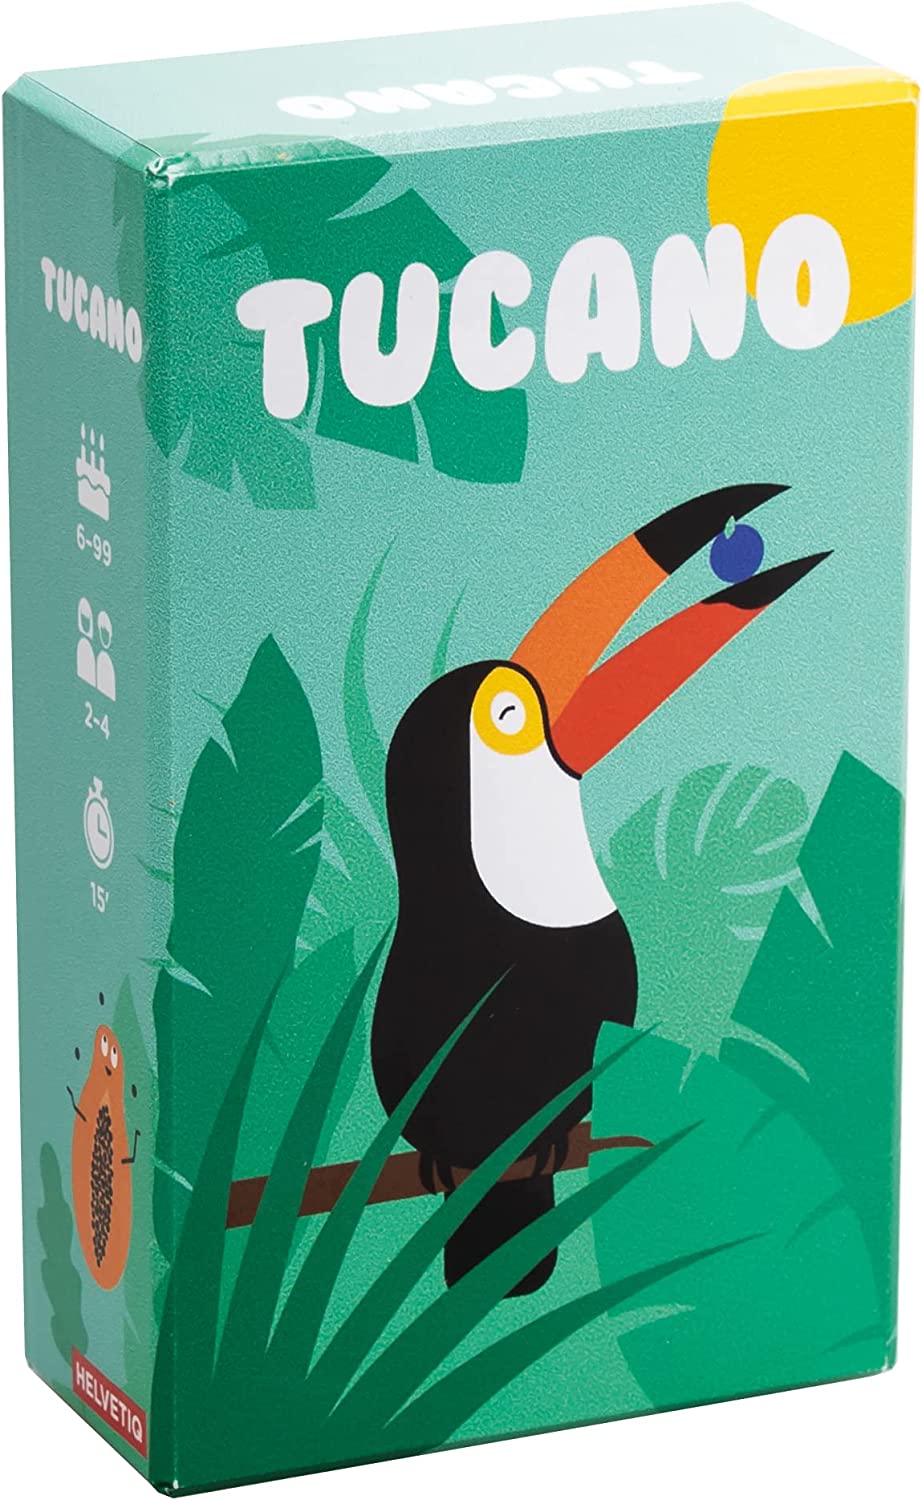 Tucano Card Game